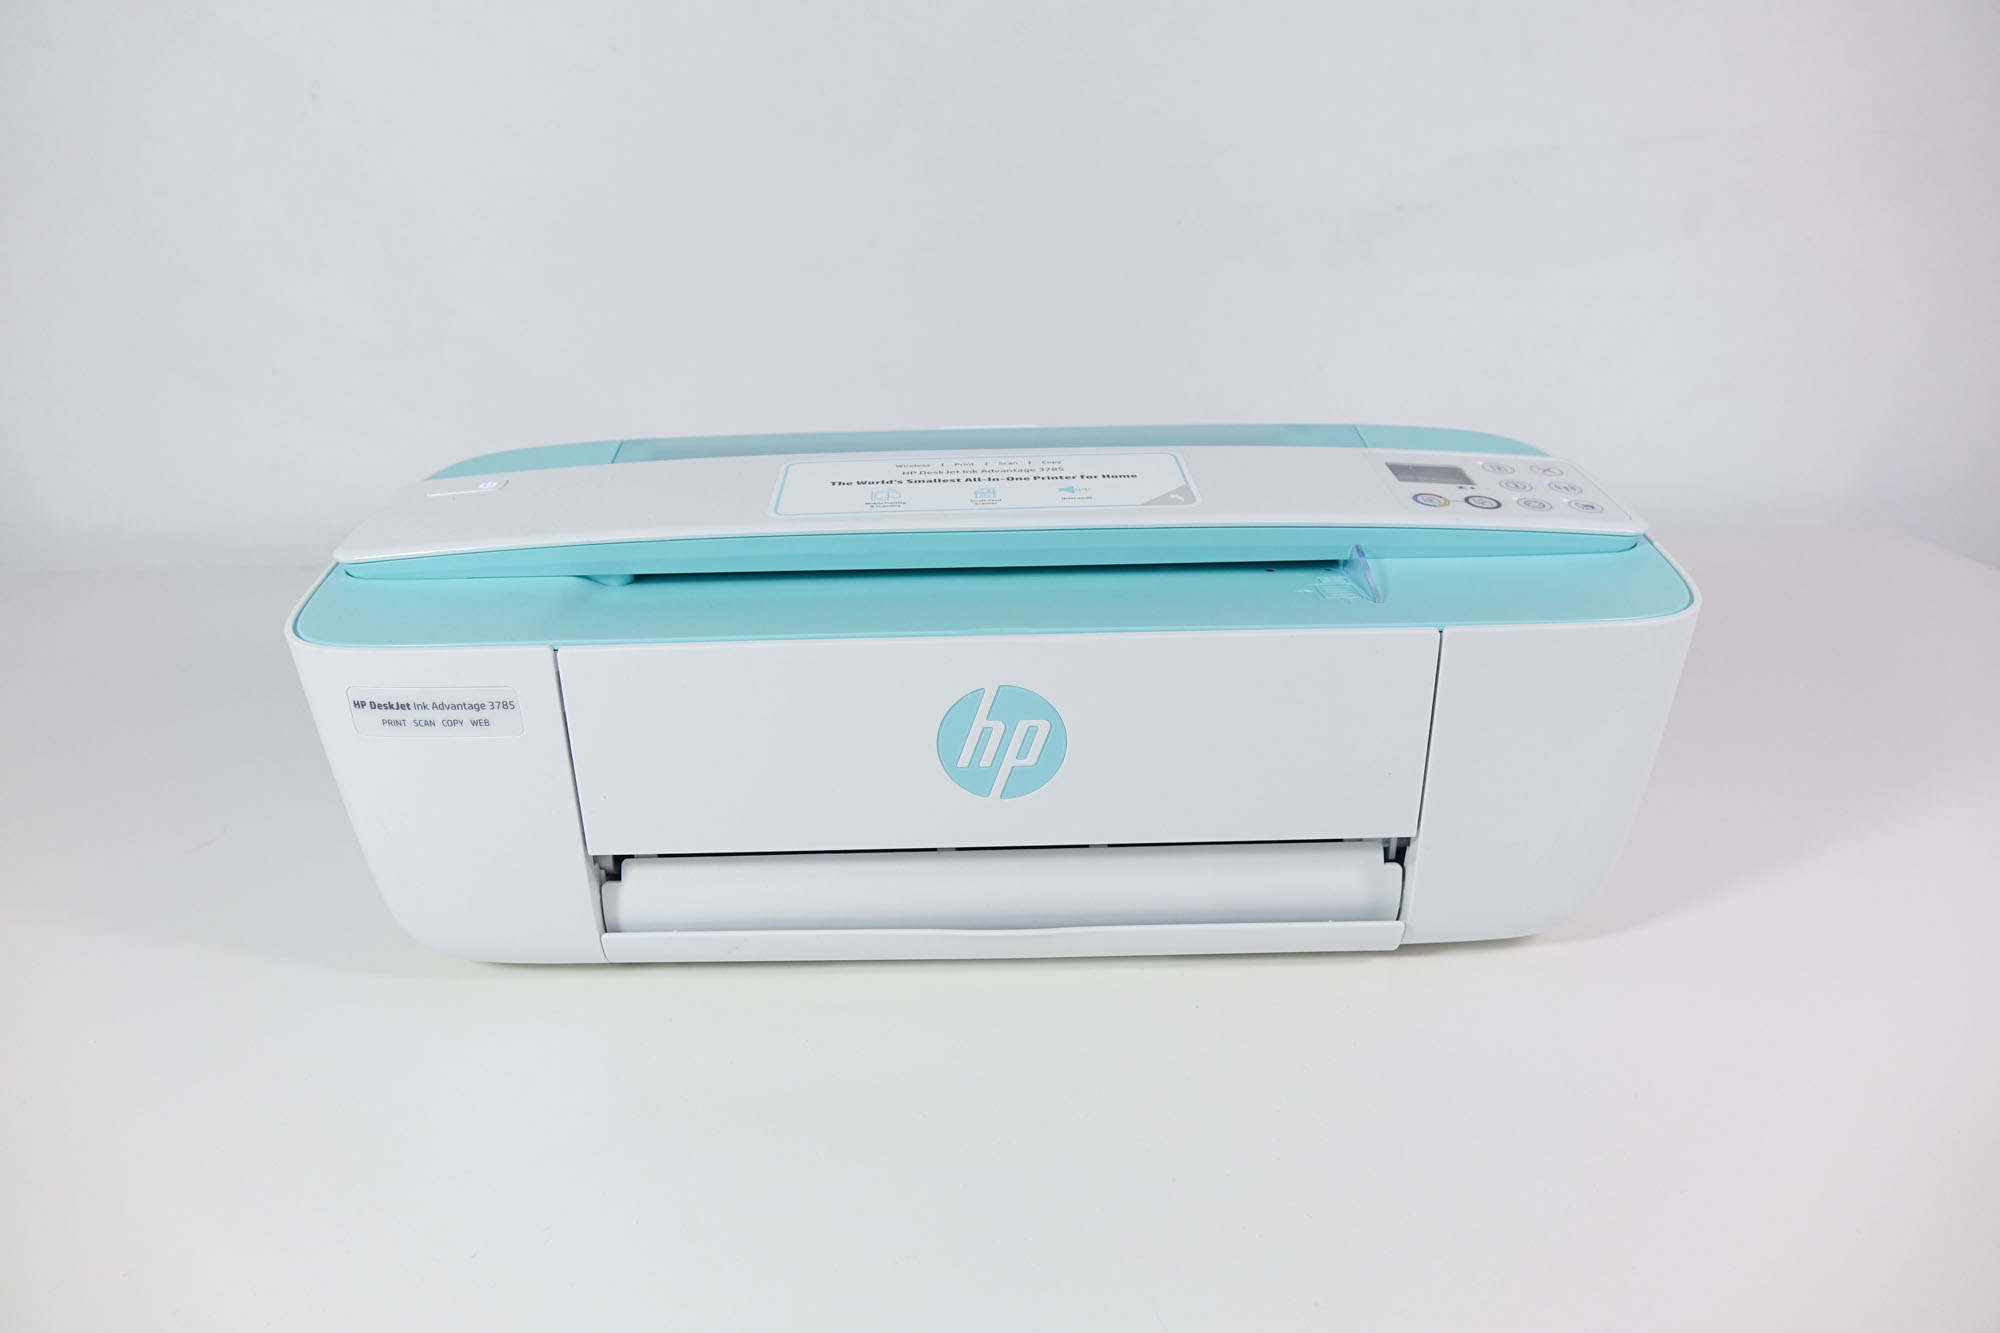 First impressions - HP Deskjet 3700 printer for smartphone owners